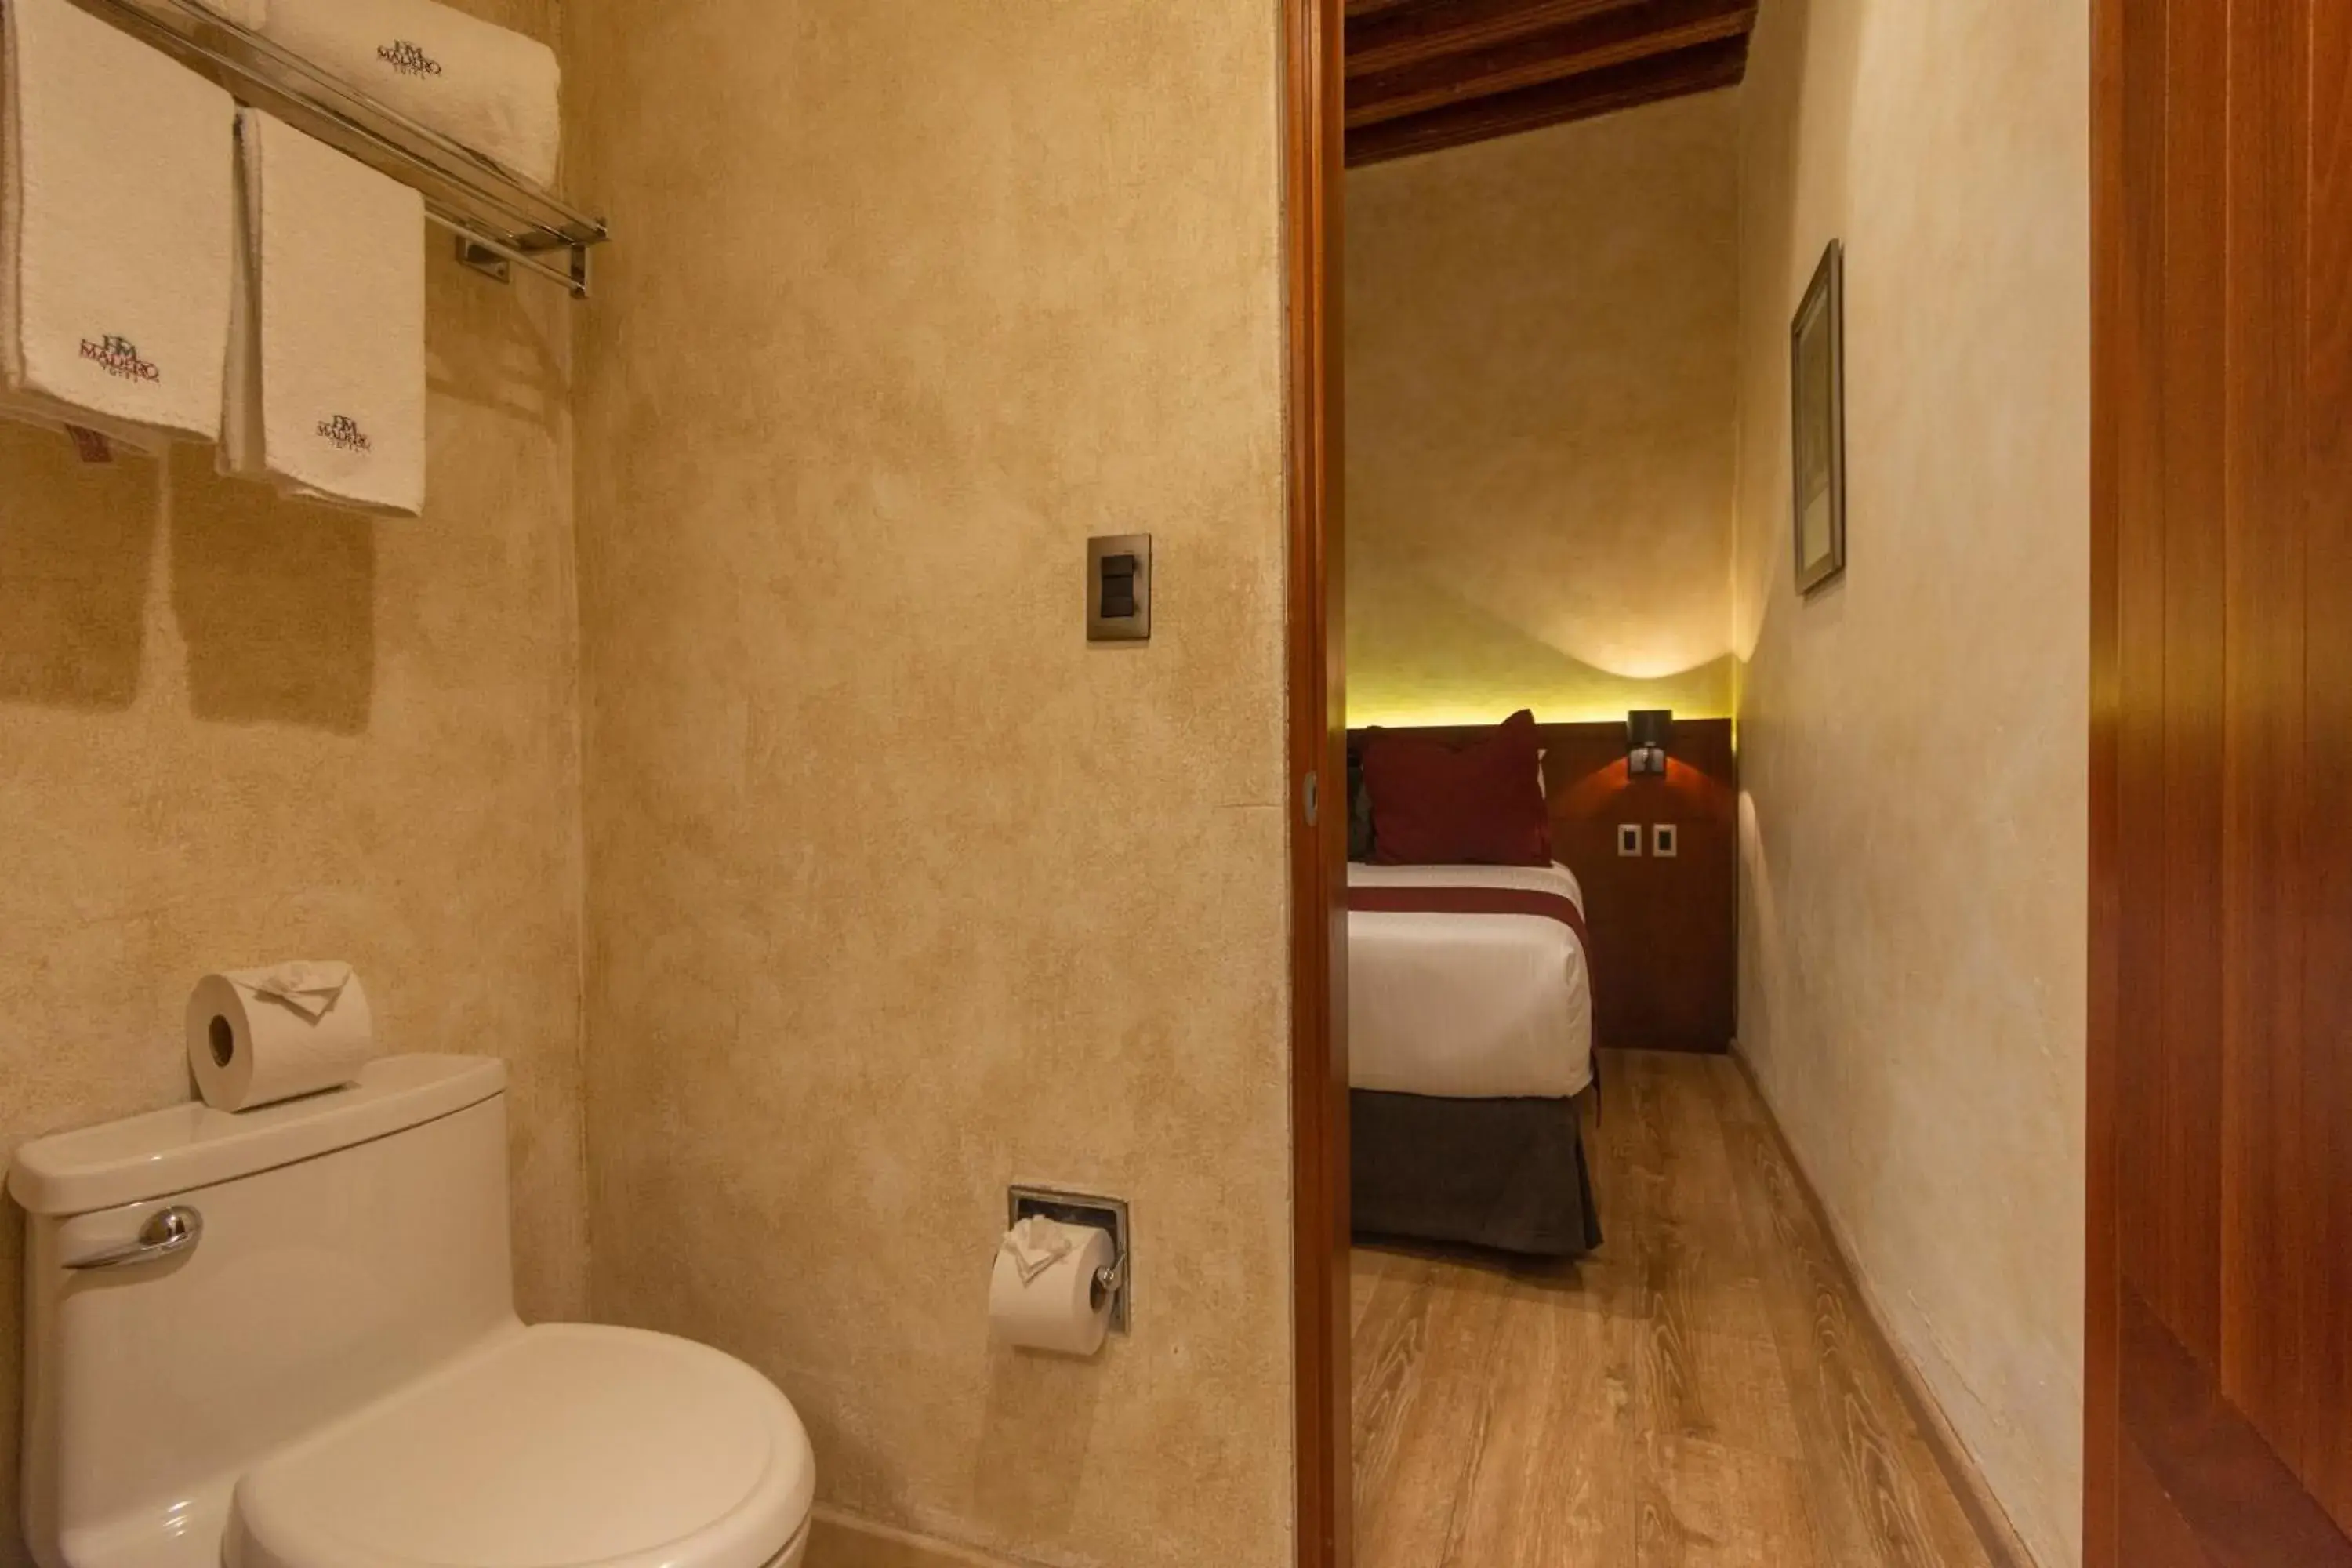 Bathroom in Hotel Madero